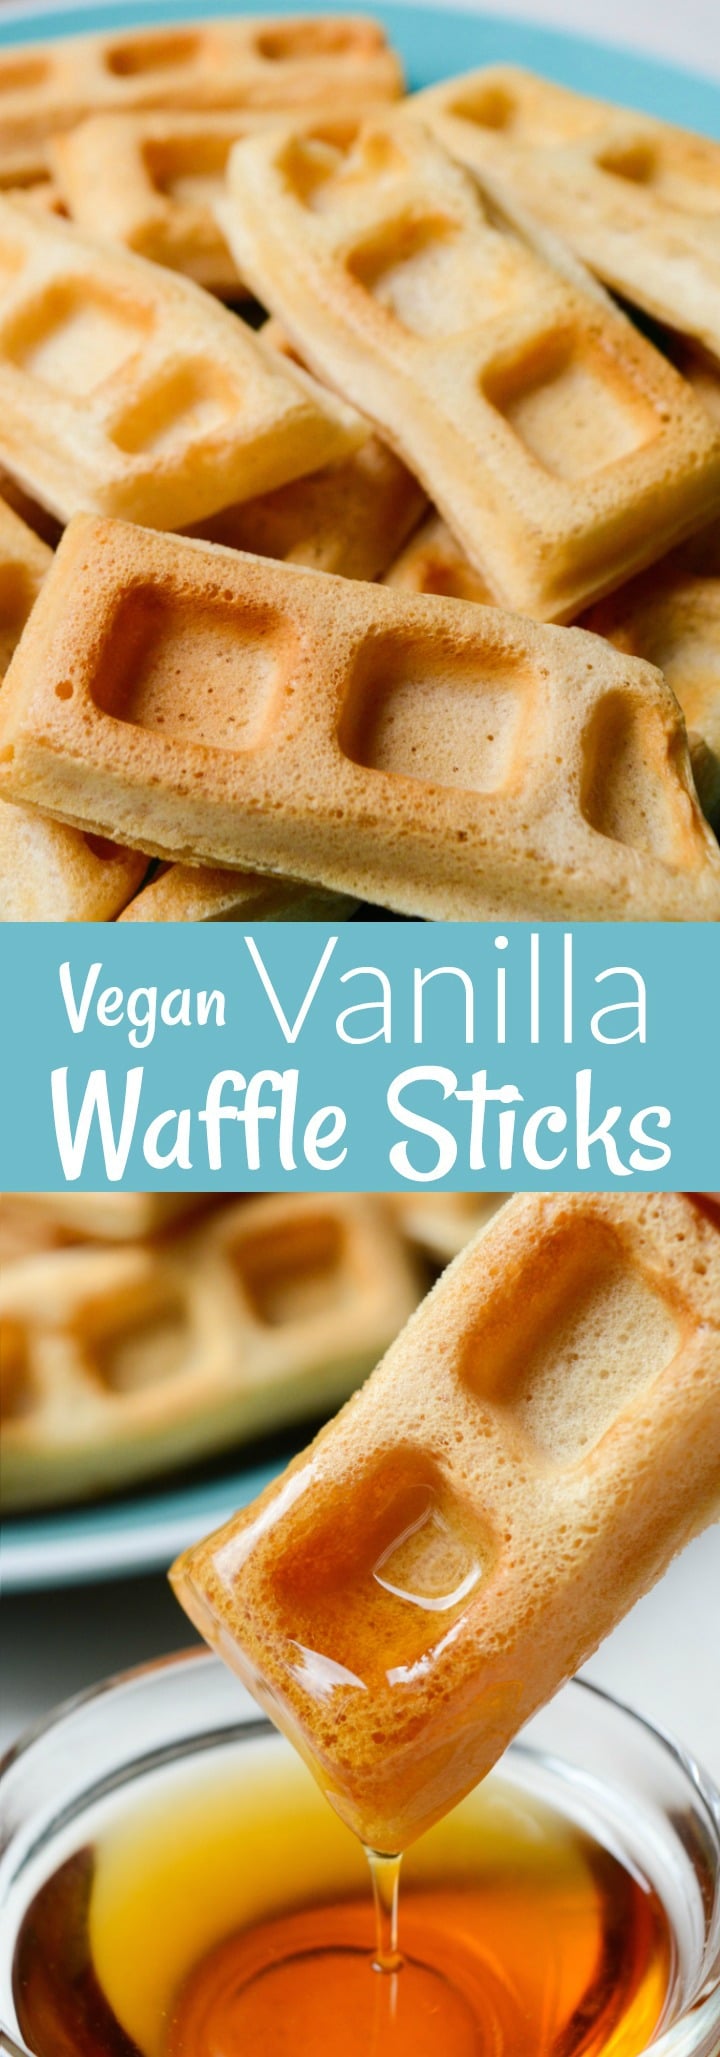 Delicious Homemade Waffle Sticks